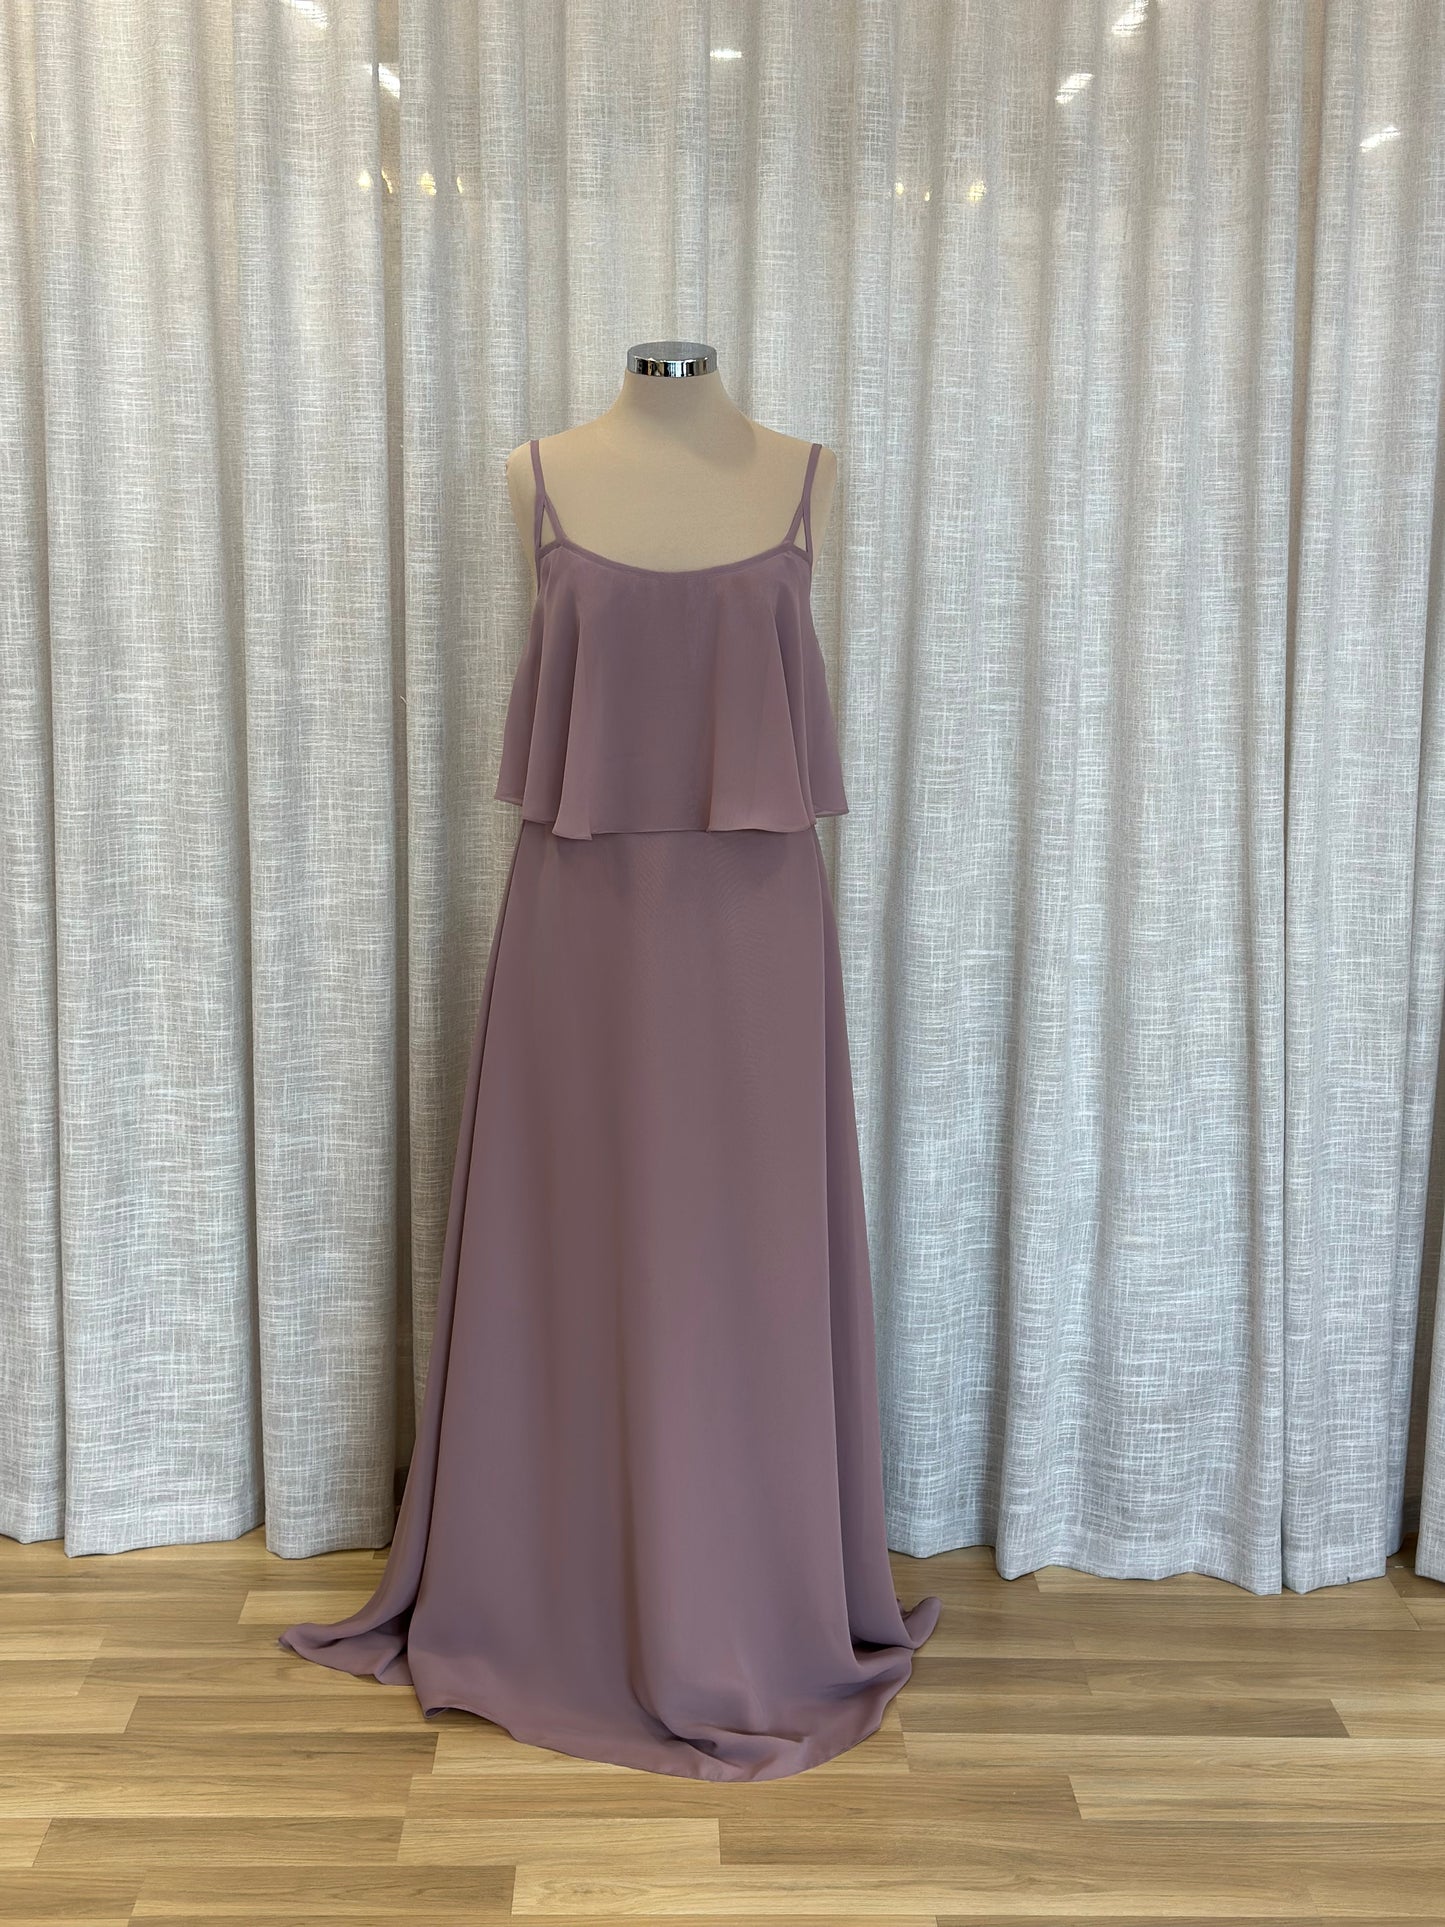 Sorella Vita 9036 - Discontinued Dress